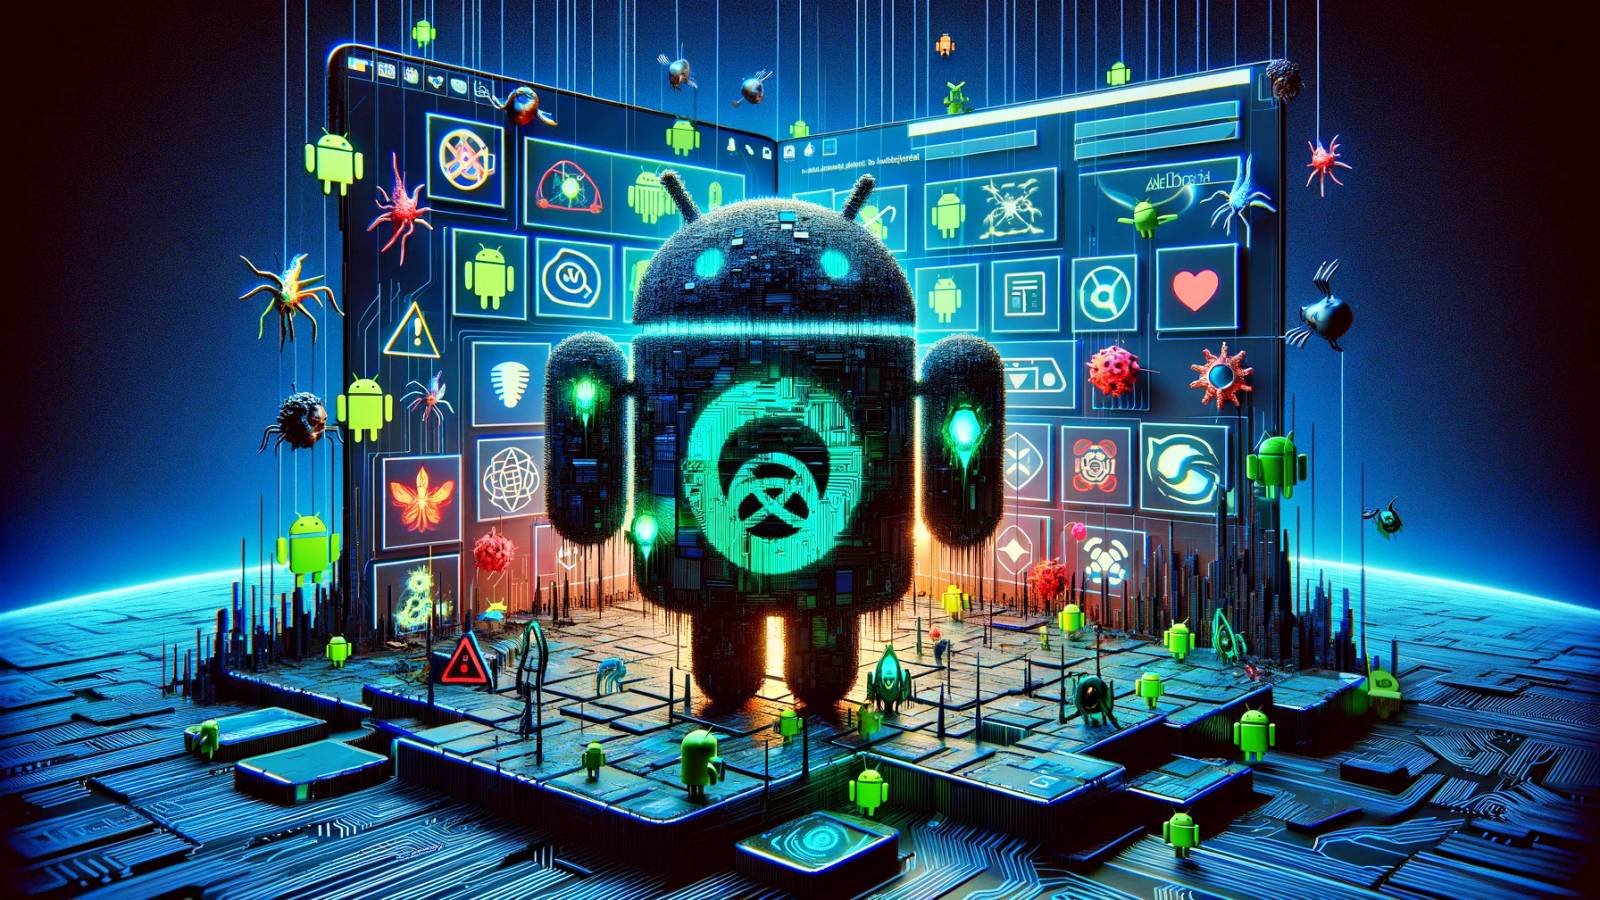 android:-amenintarea-foarte-serioasa-care-vizeaza-milioane-de-telefoane-|-idevice.ro